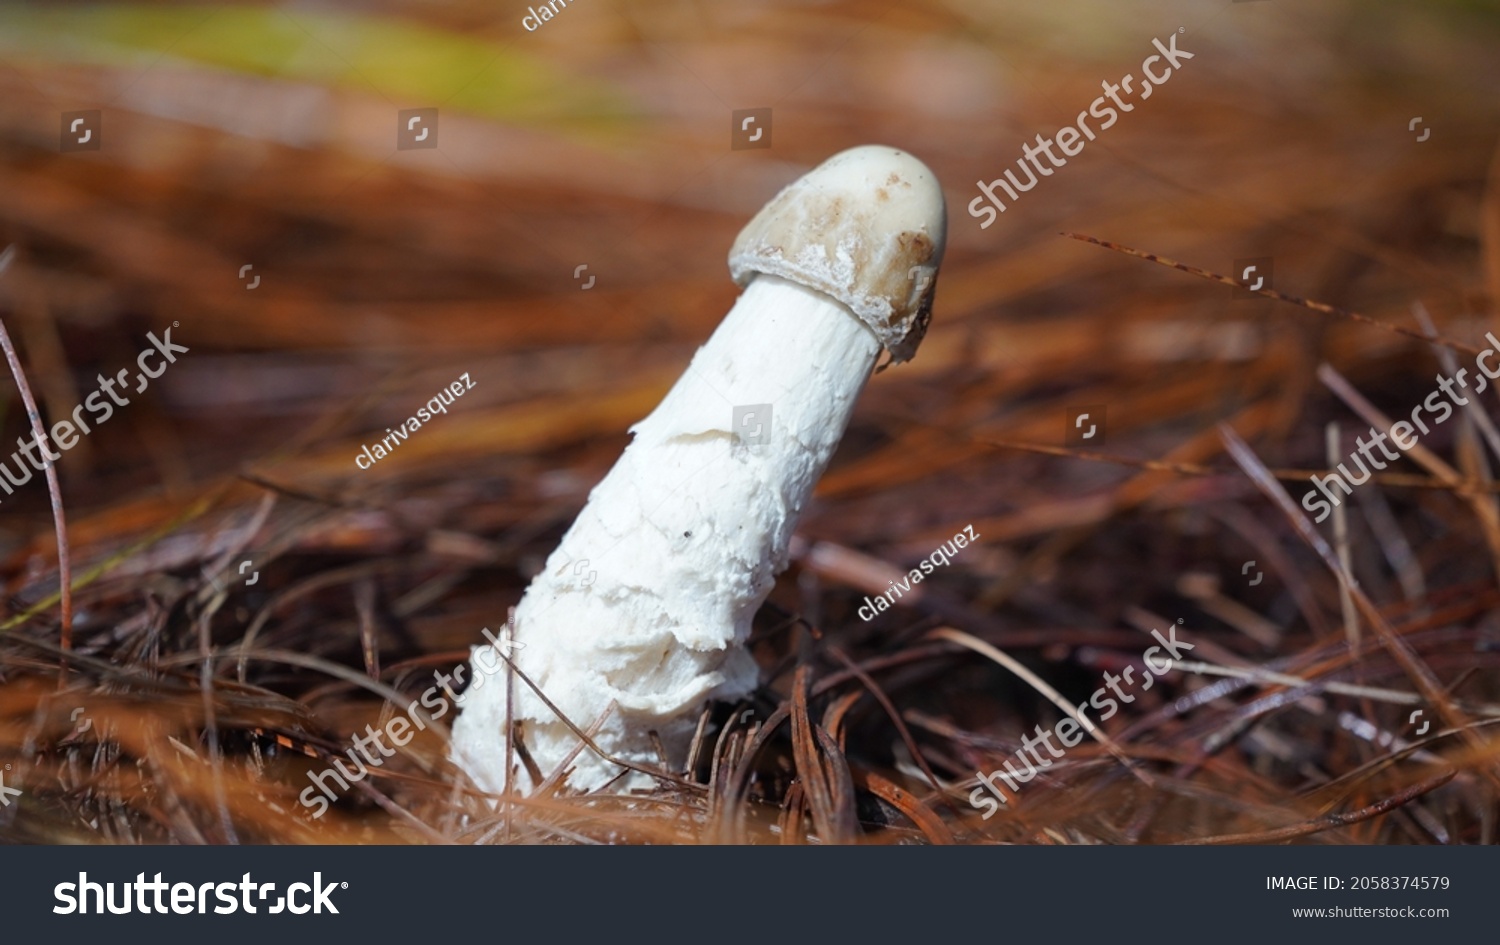 Why is dick shaped like mushroom